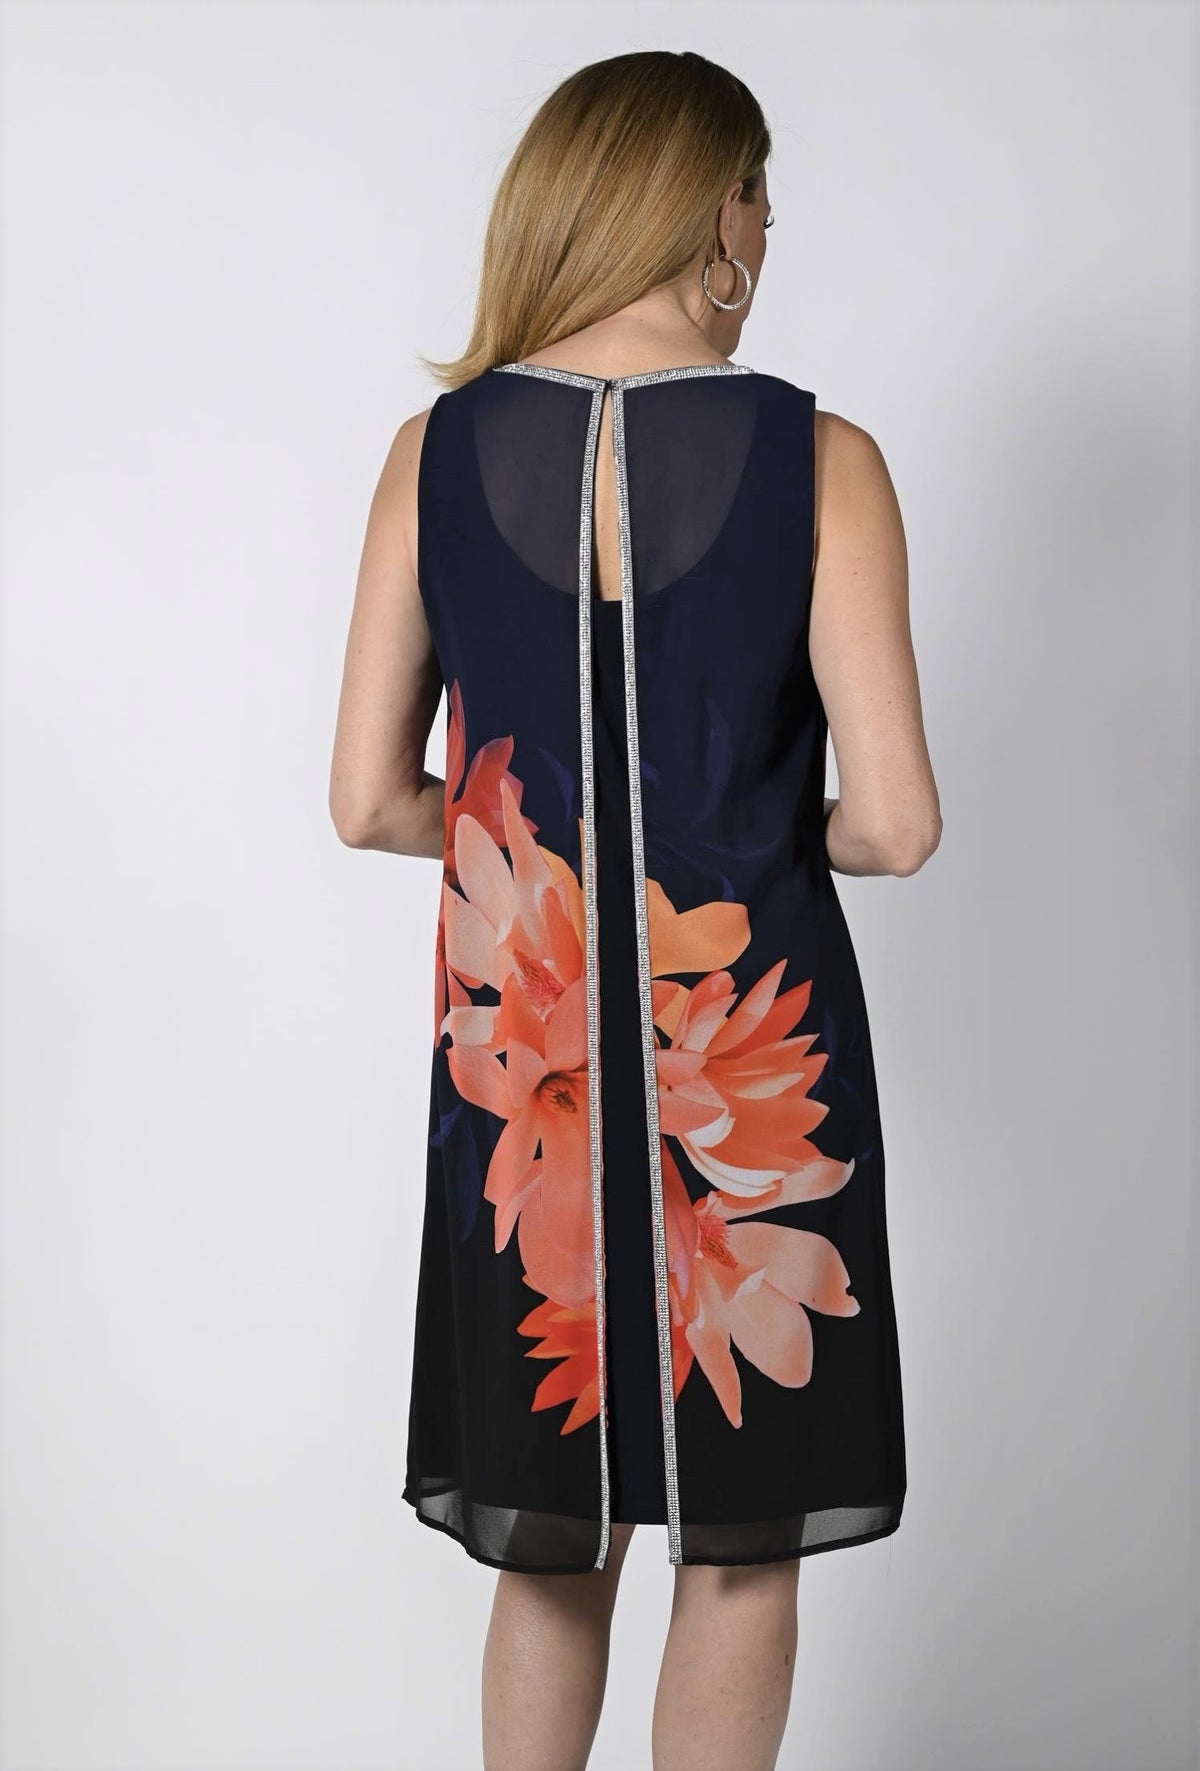 Floral Overlay Dress With Jewel Trim Split Back